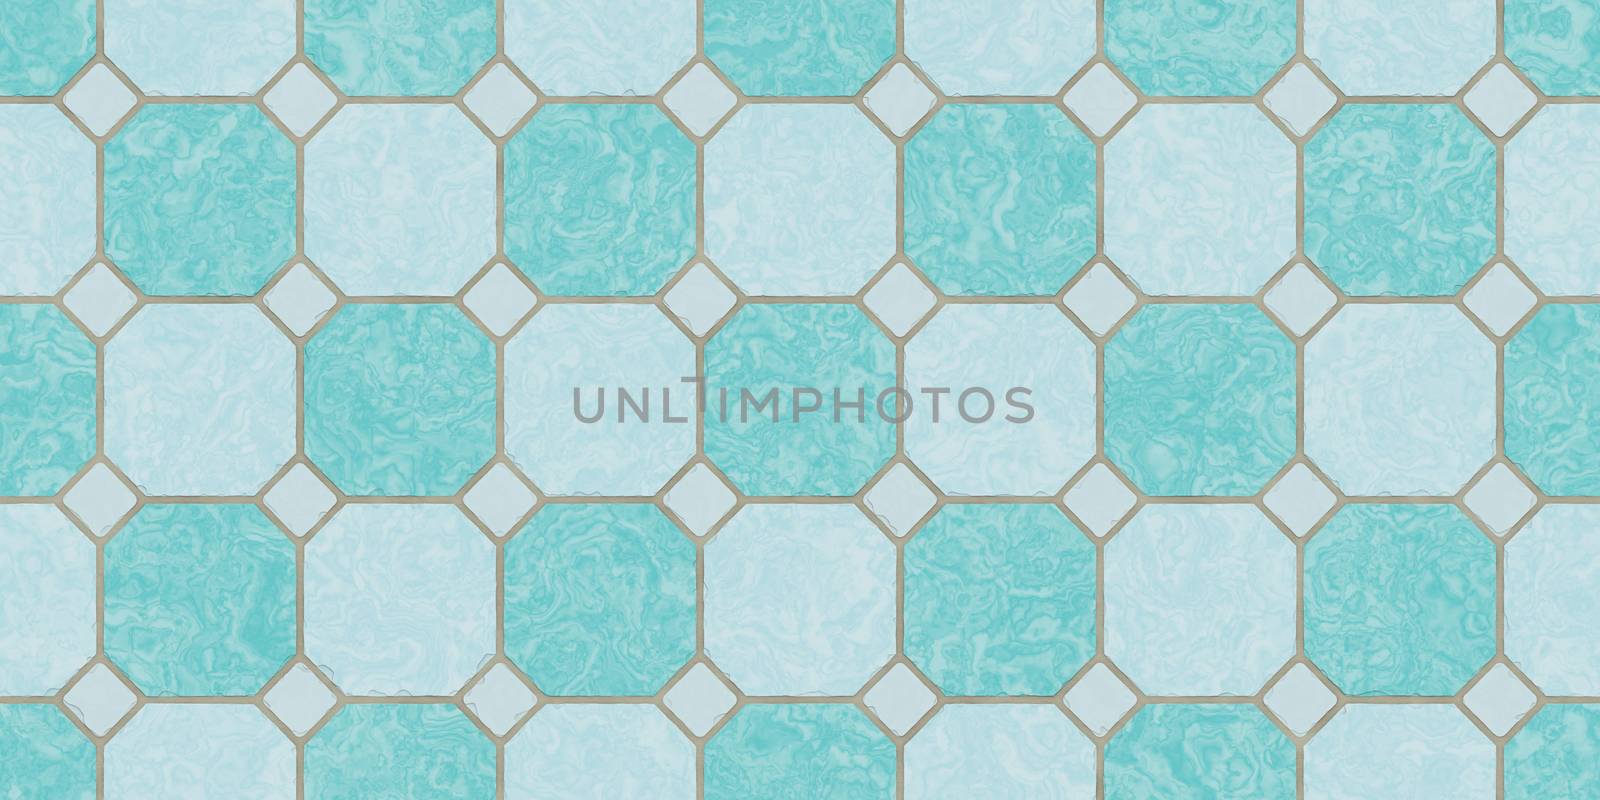 Deep Sea Blue Seamless Classic Floor Tile Texture. Simple Kitchen, Toilet or Bathroom Mosaic Tiles Background. 3D rendering. 3D illustration.